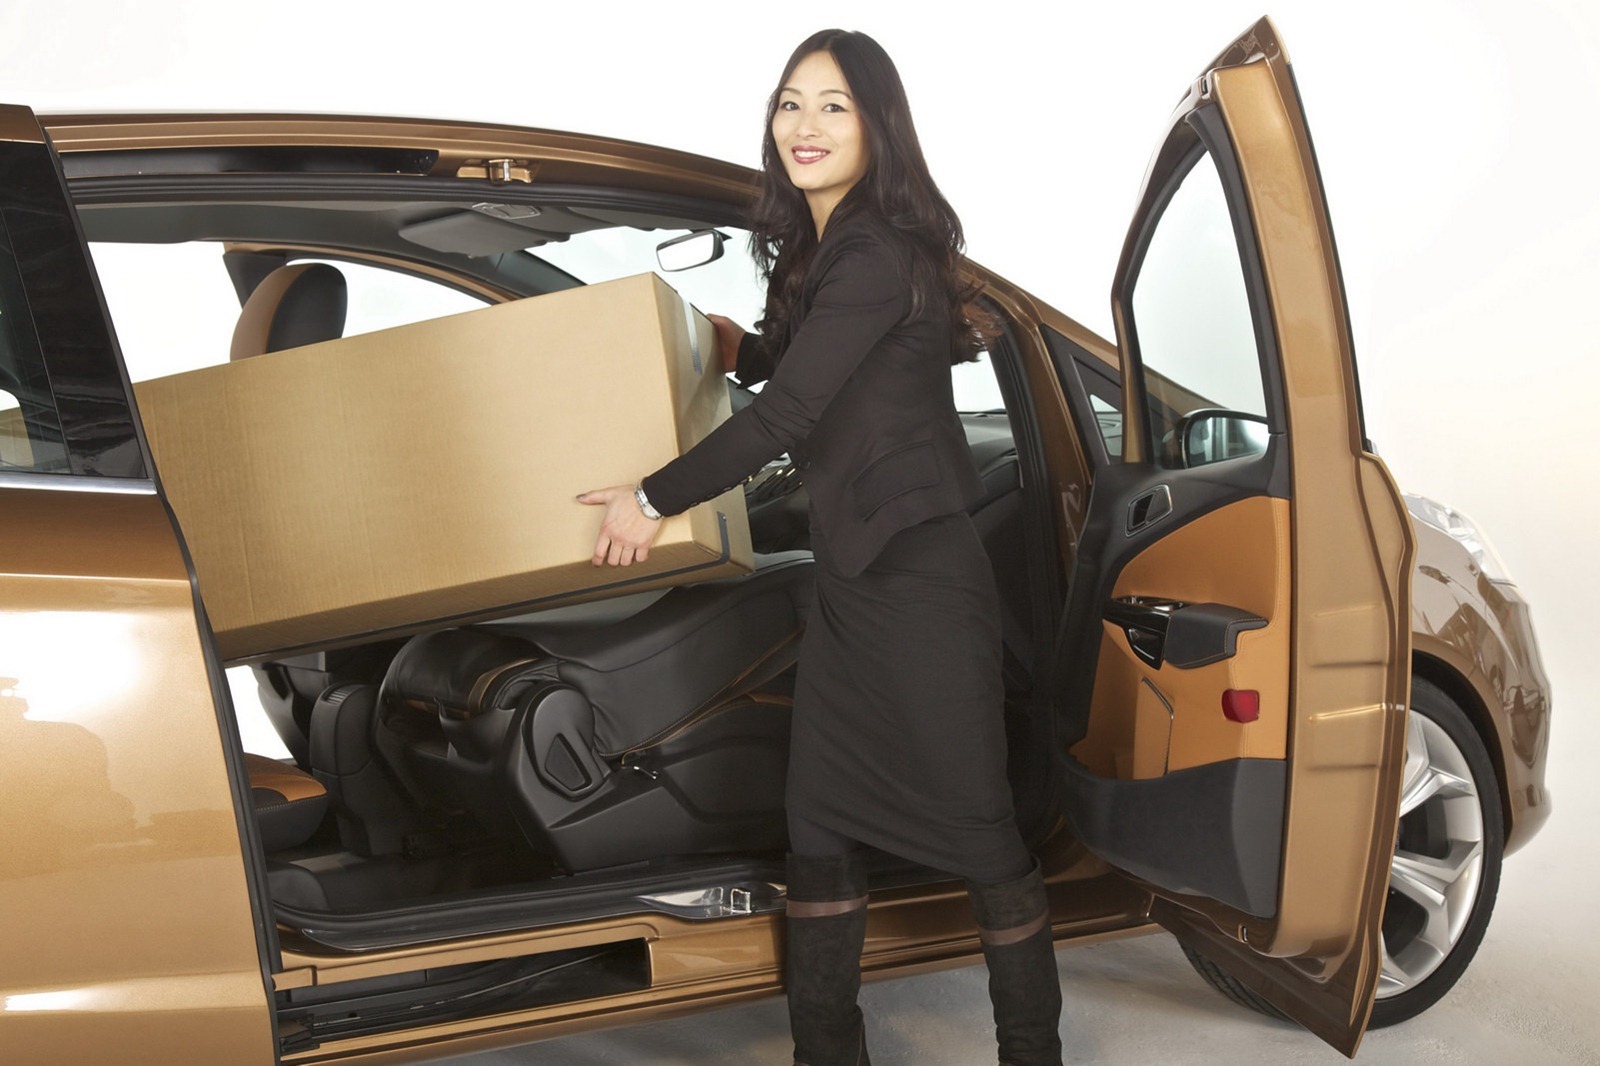 Designerul Ford, Erika Tsubaki, demonstreaza avantajele lui Ford B-Max